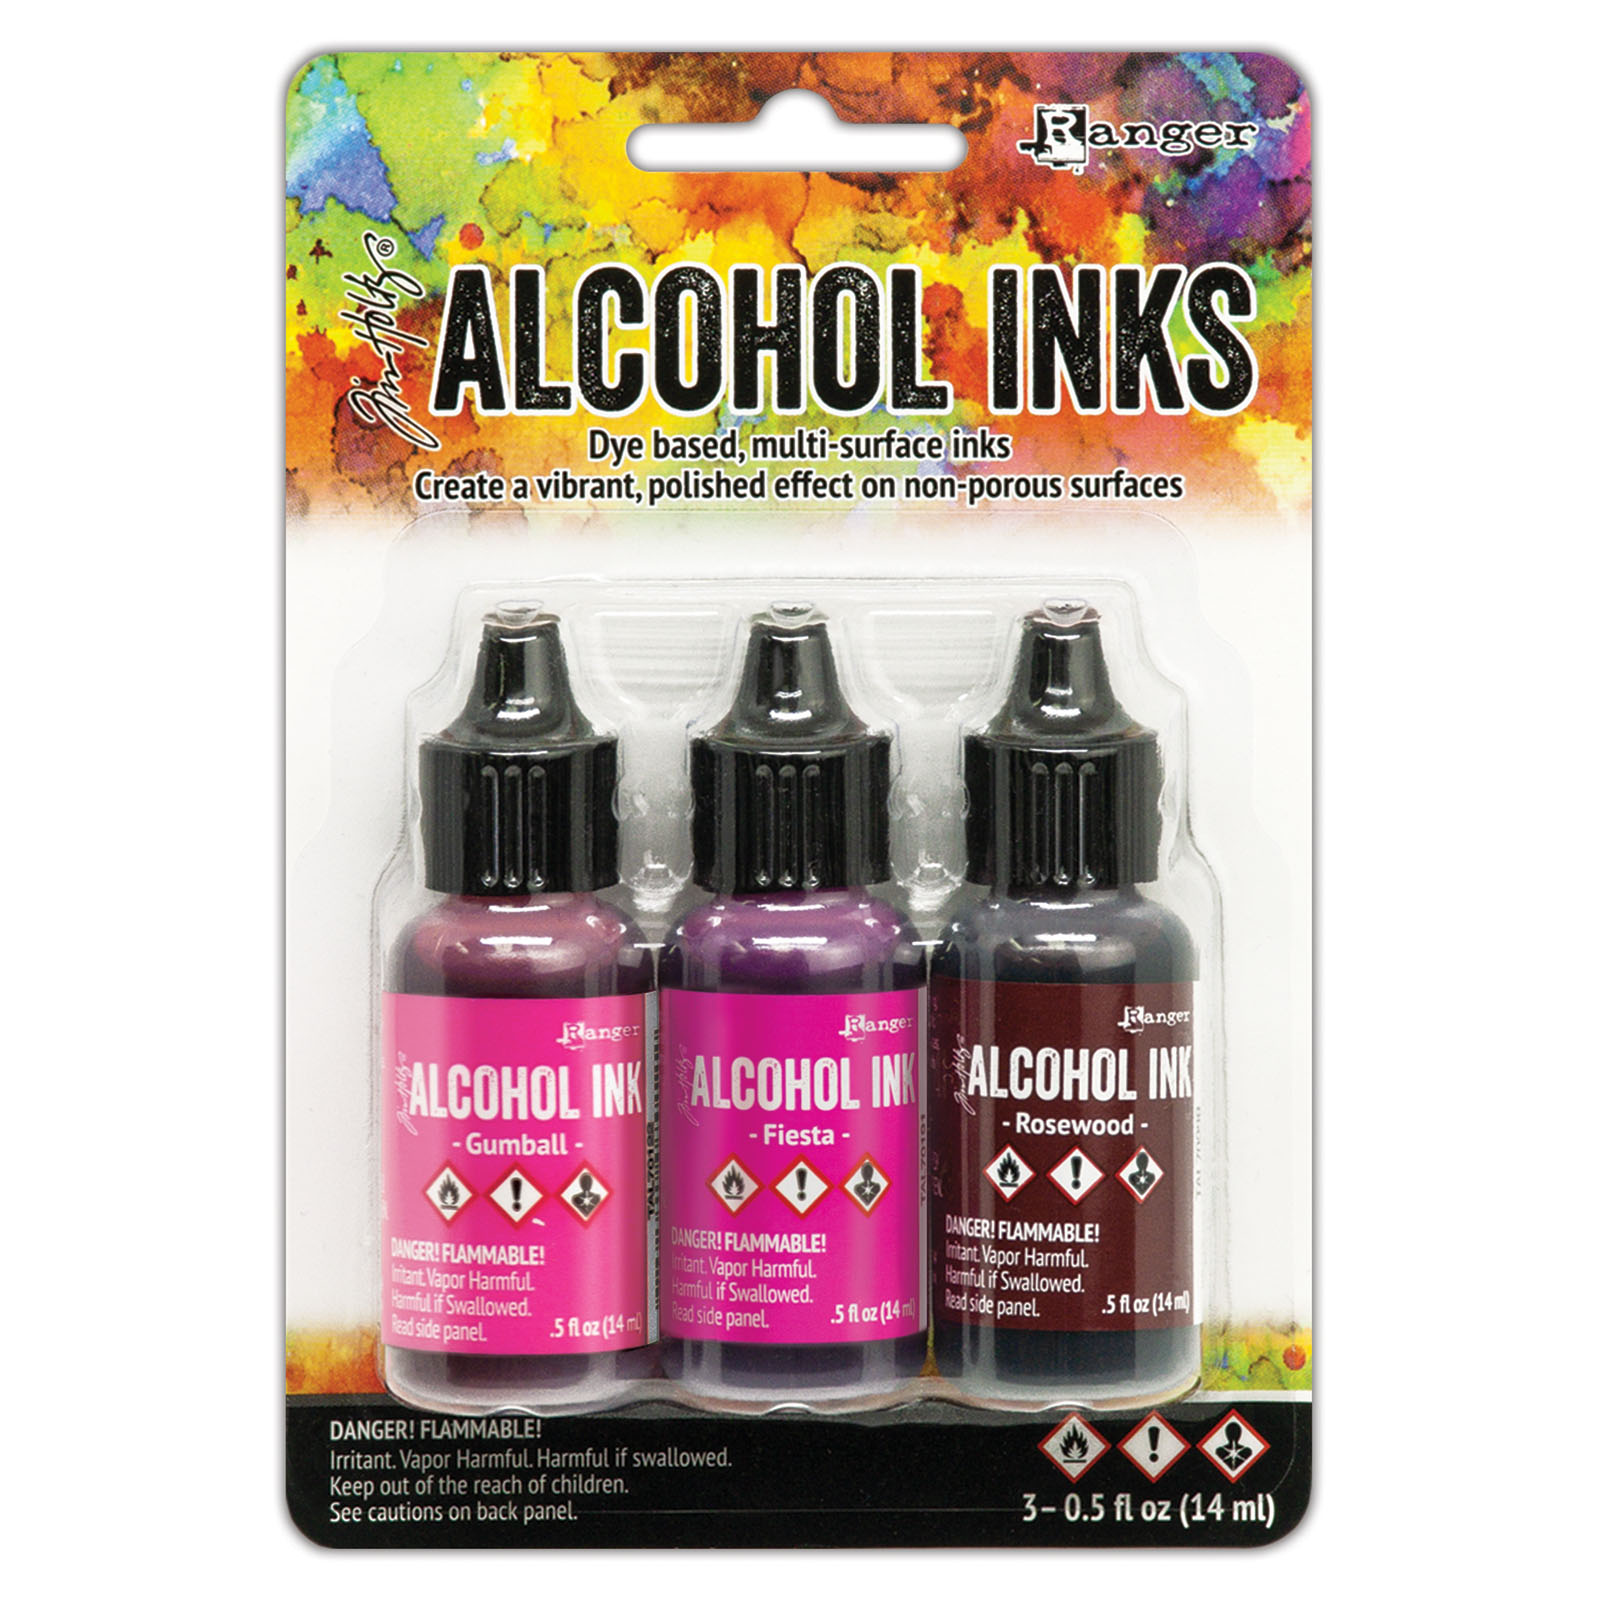 Tim Holtz Alcohol Inks - Metallic Mixatives (view colors) - Craft